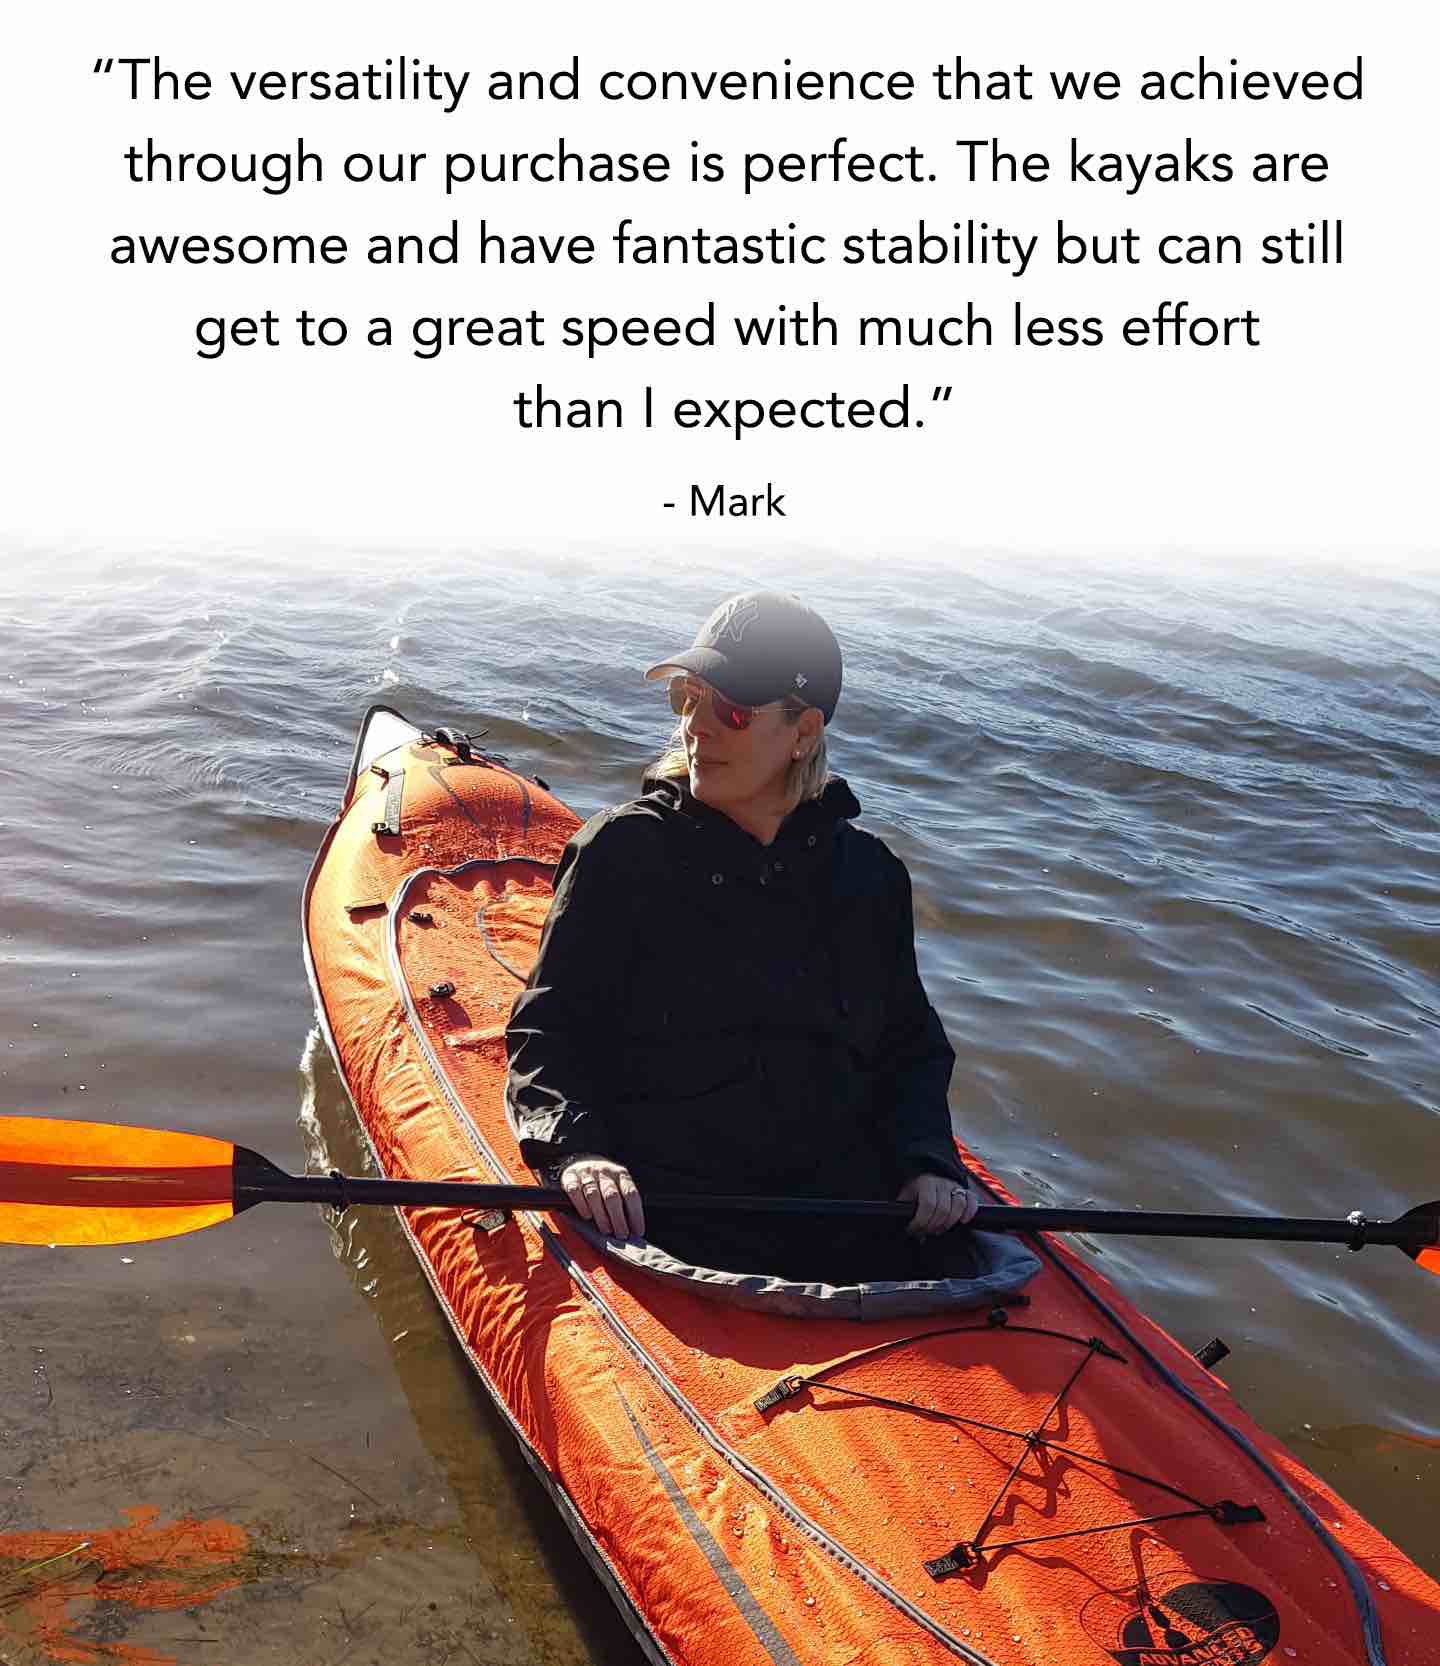 advancedframe convertible elite kayak mark testimonial